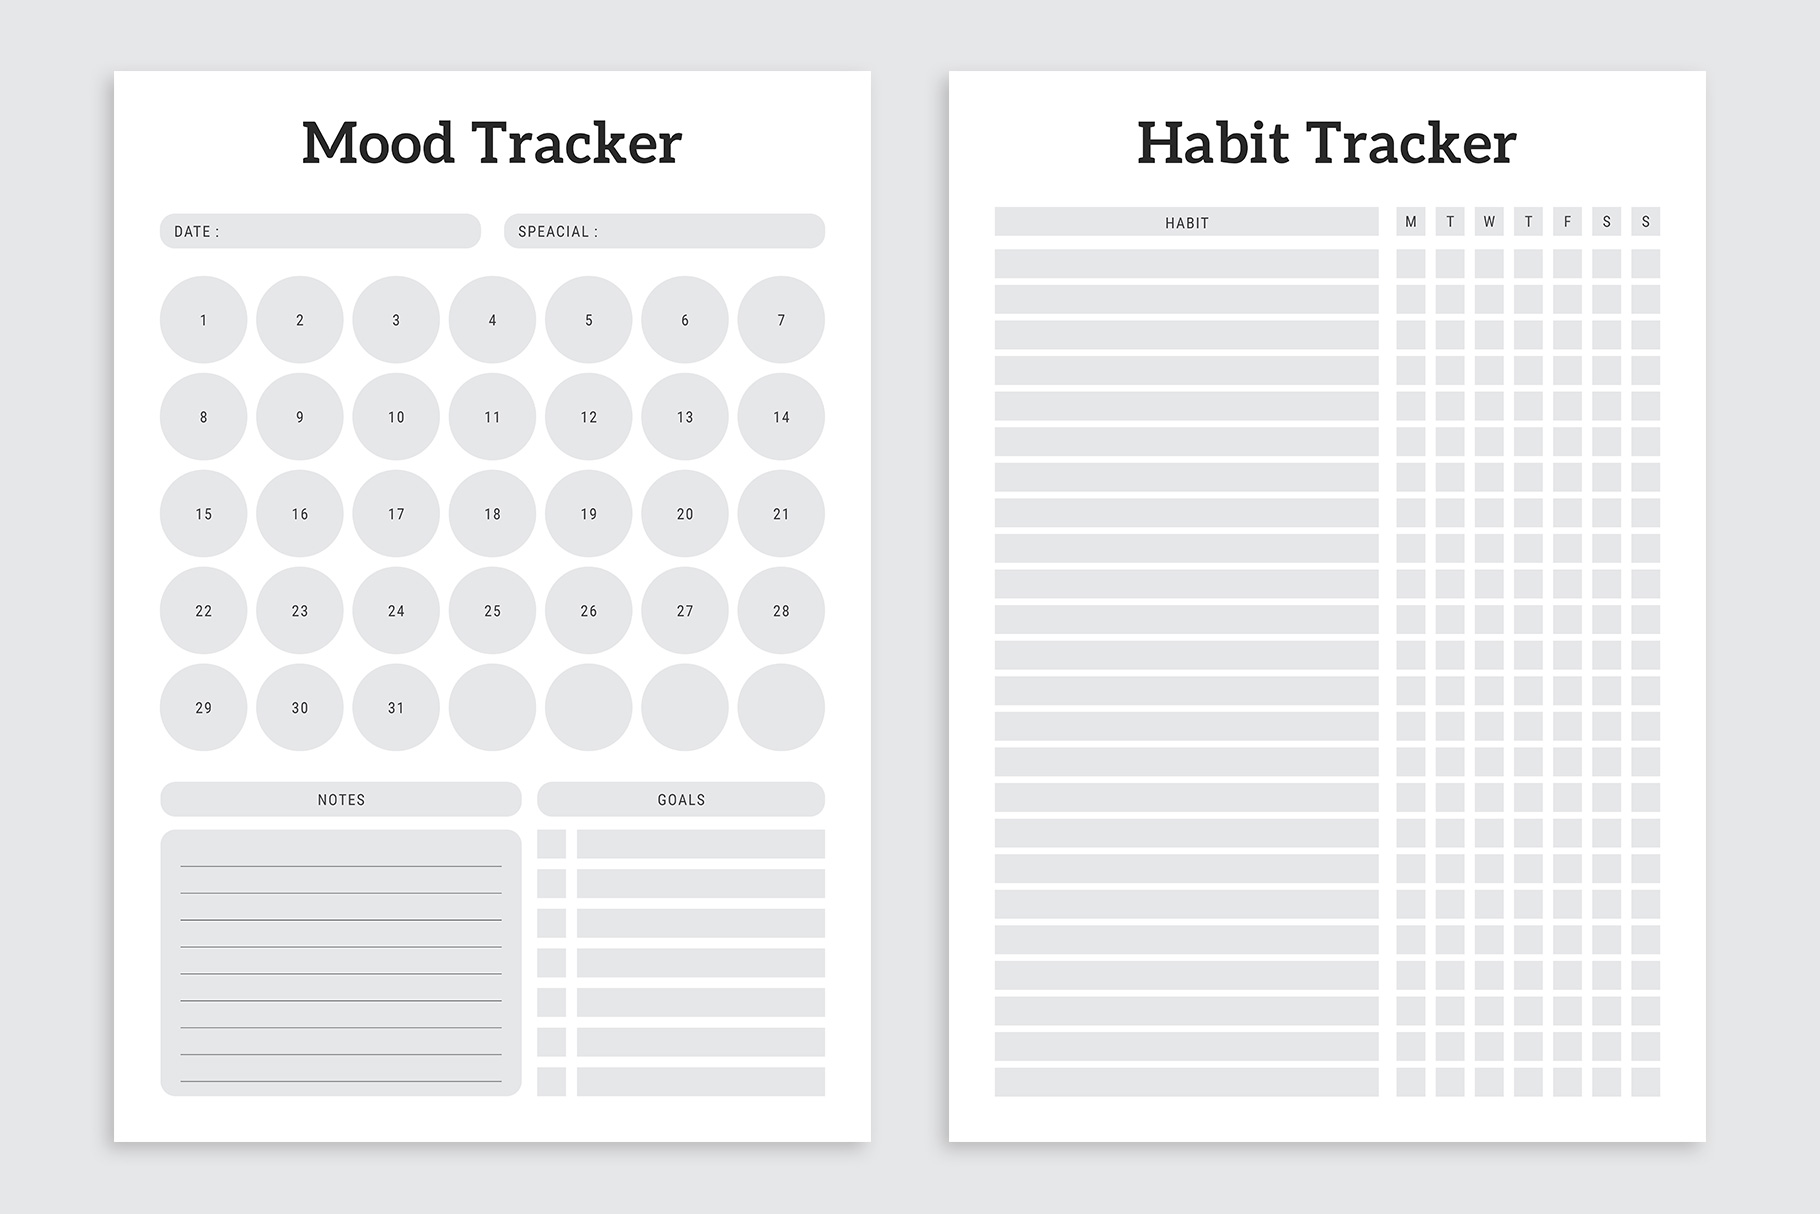 Mood Tracker & Habit Tracker designs.